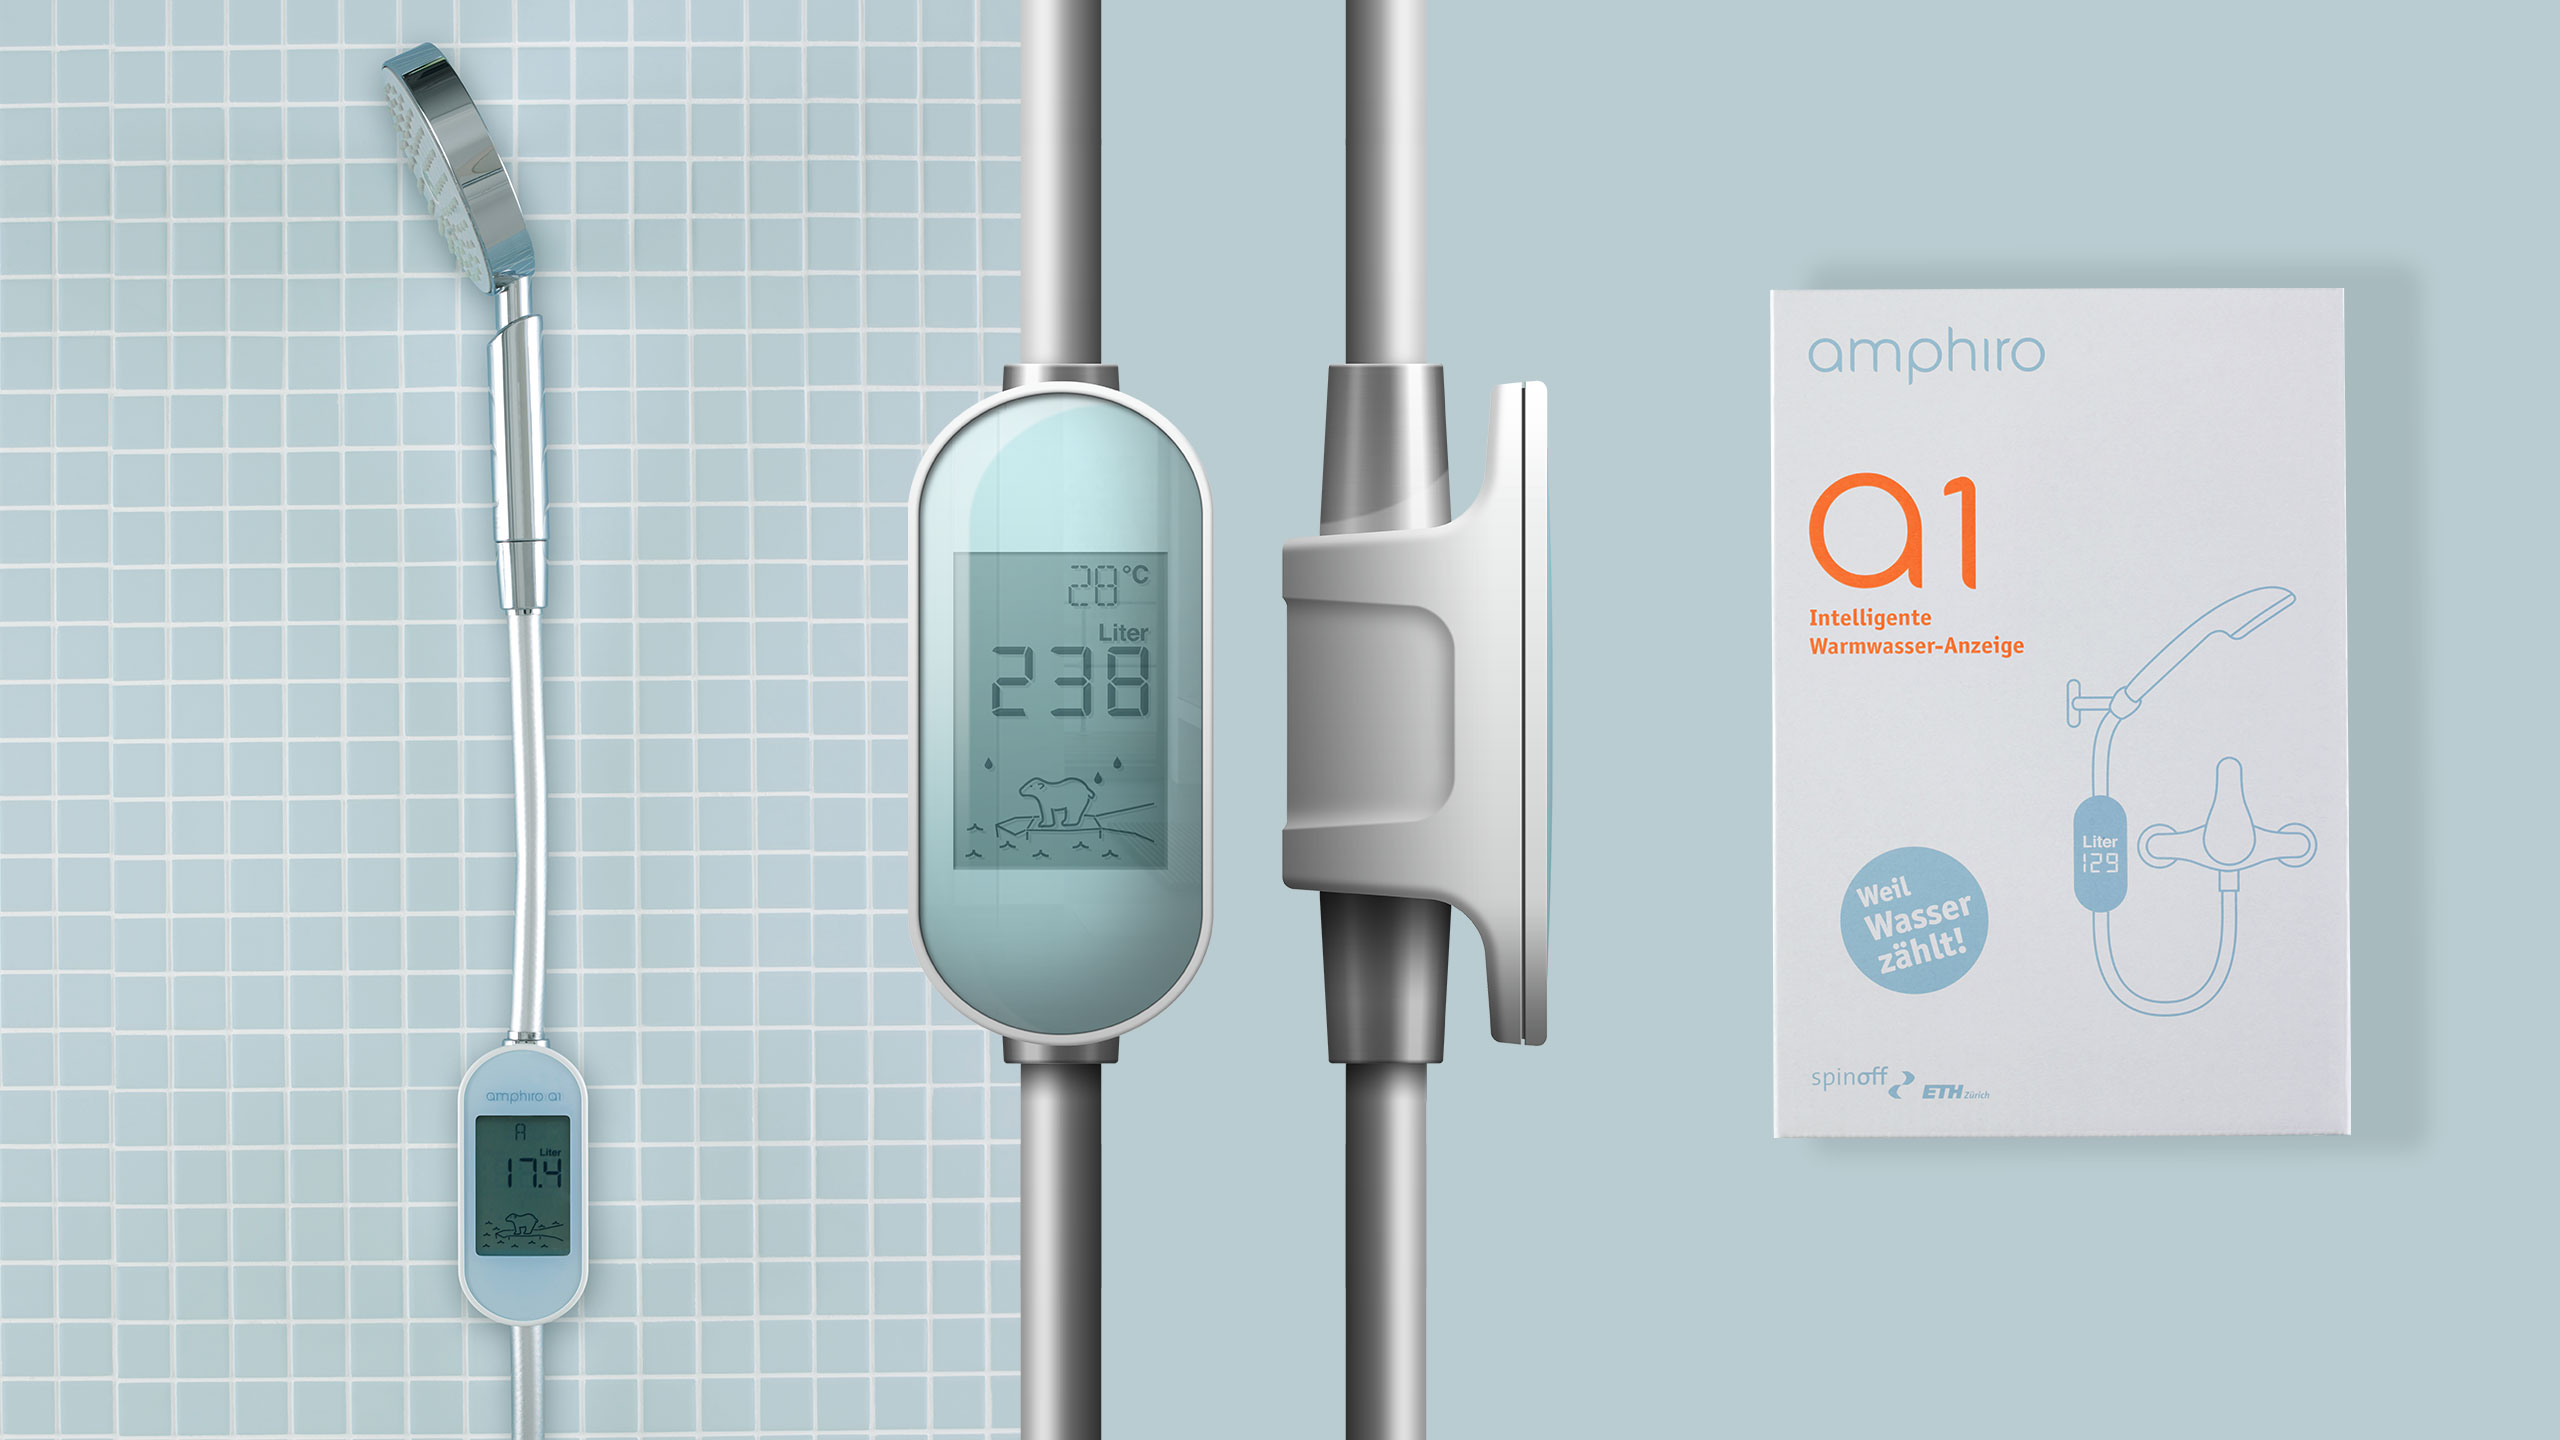 09 milani design consulting agency amphiro product consumergoods startup sustainability shower